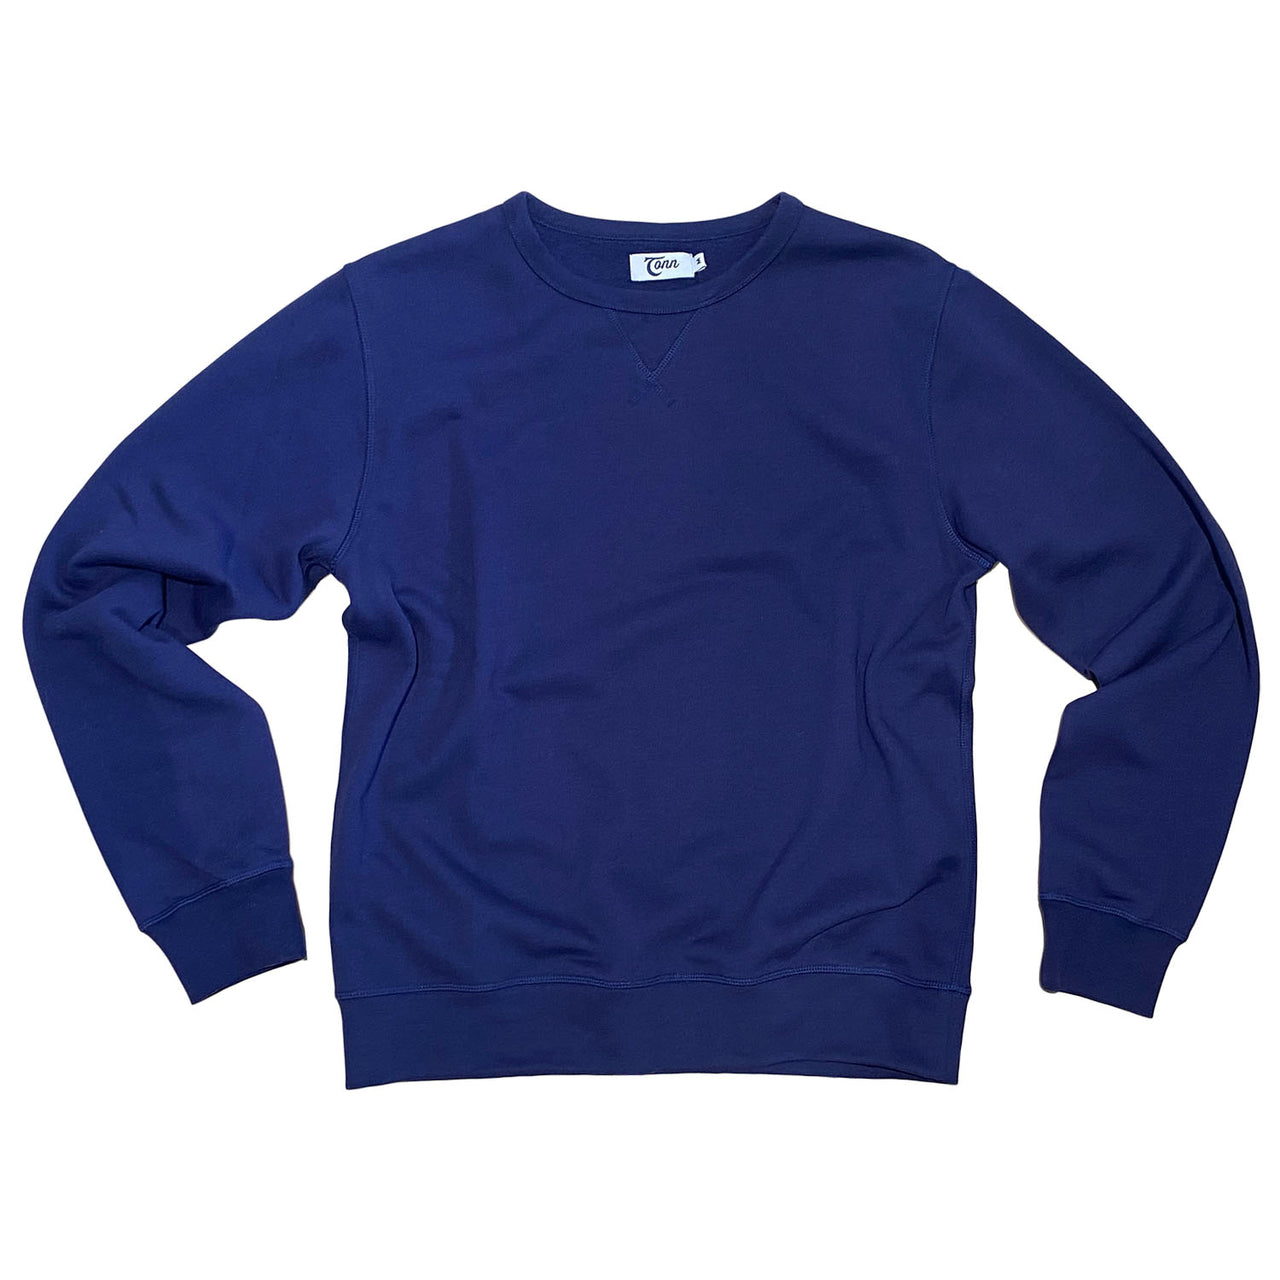 Basic Organic Cotton Sweatshirt Navy - LAST ONE!